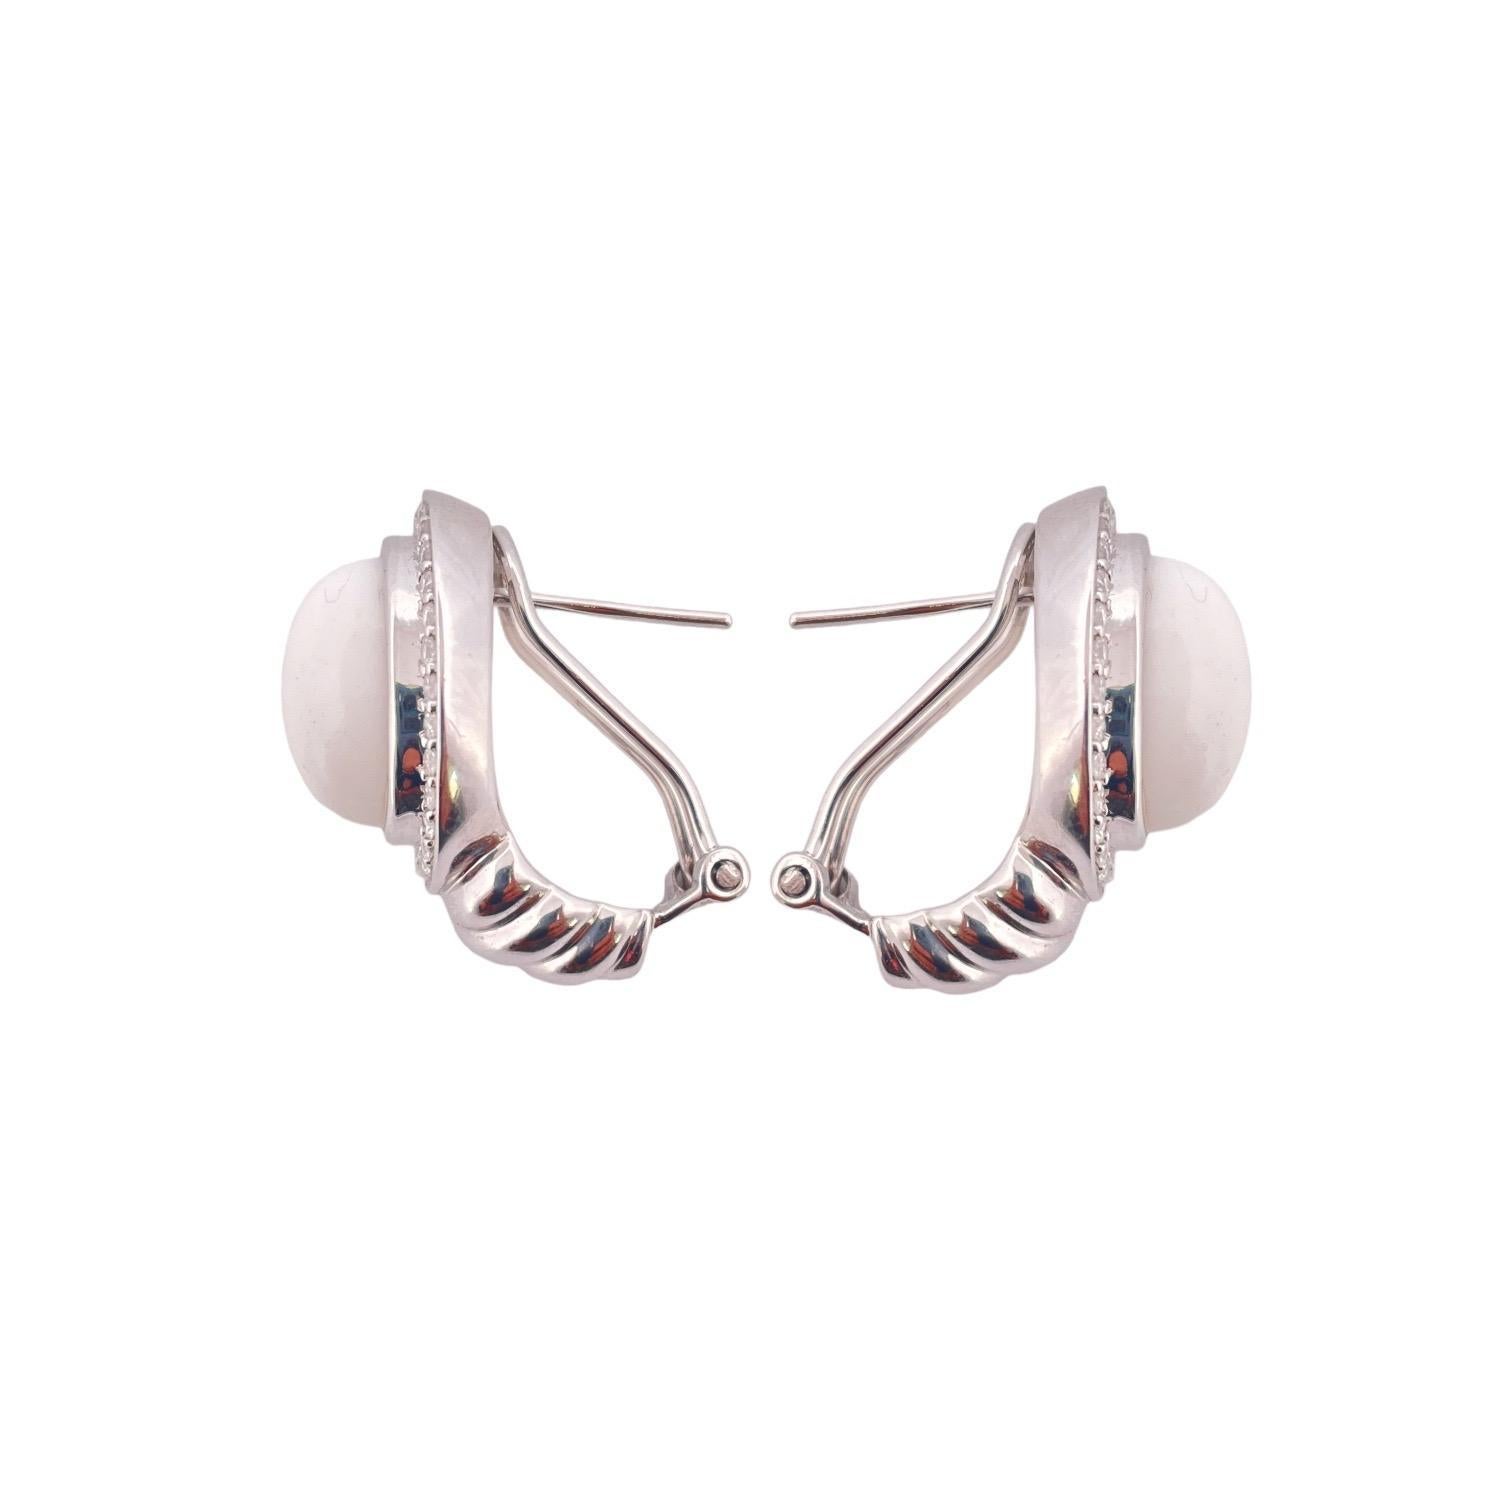 Retro Glamorous 14K White Gold diamonds and white oval earrings For Sale